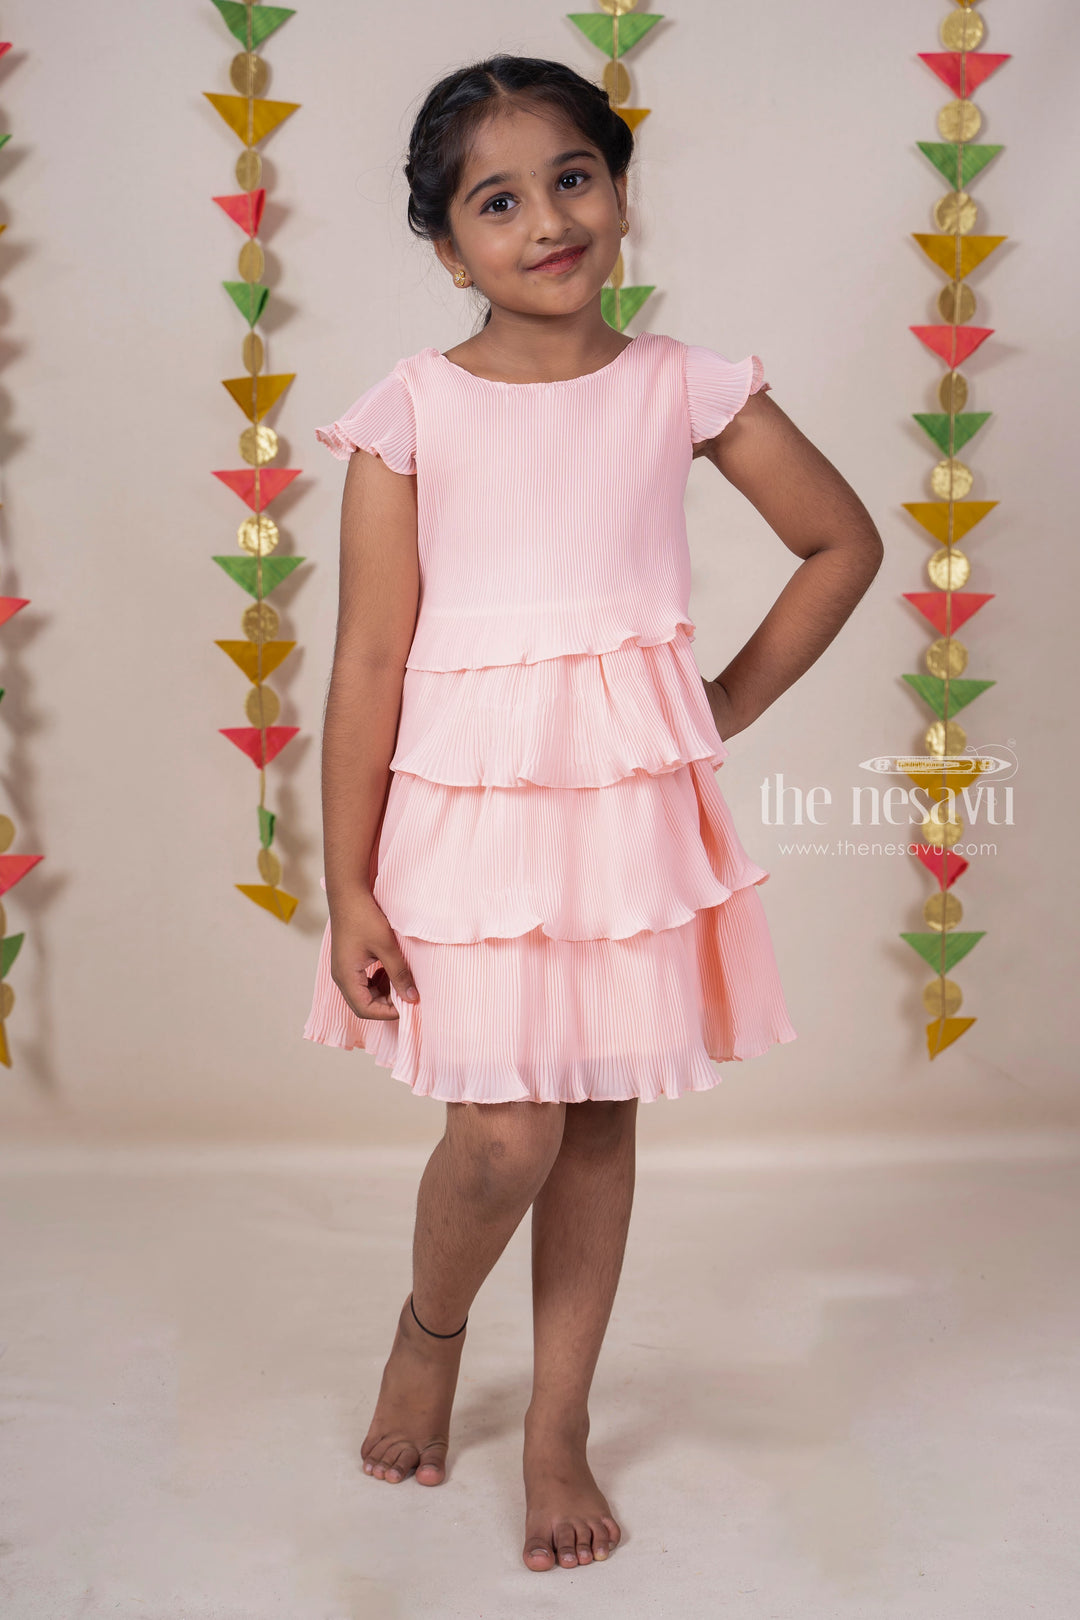 The Nesavu Frocks & Dresses Coral Pink Semi crushed Crepe Designer Cotton Frock For Baby Girls psr silks Nesavu 20 (3Y) / PeachPuff GFC893